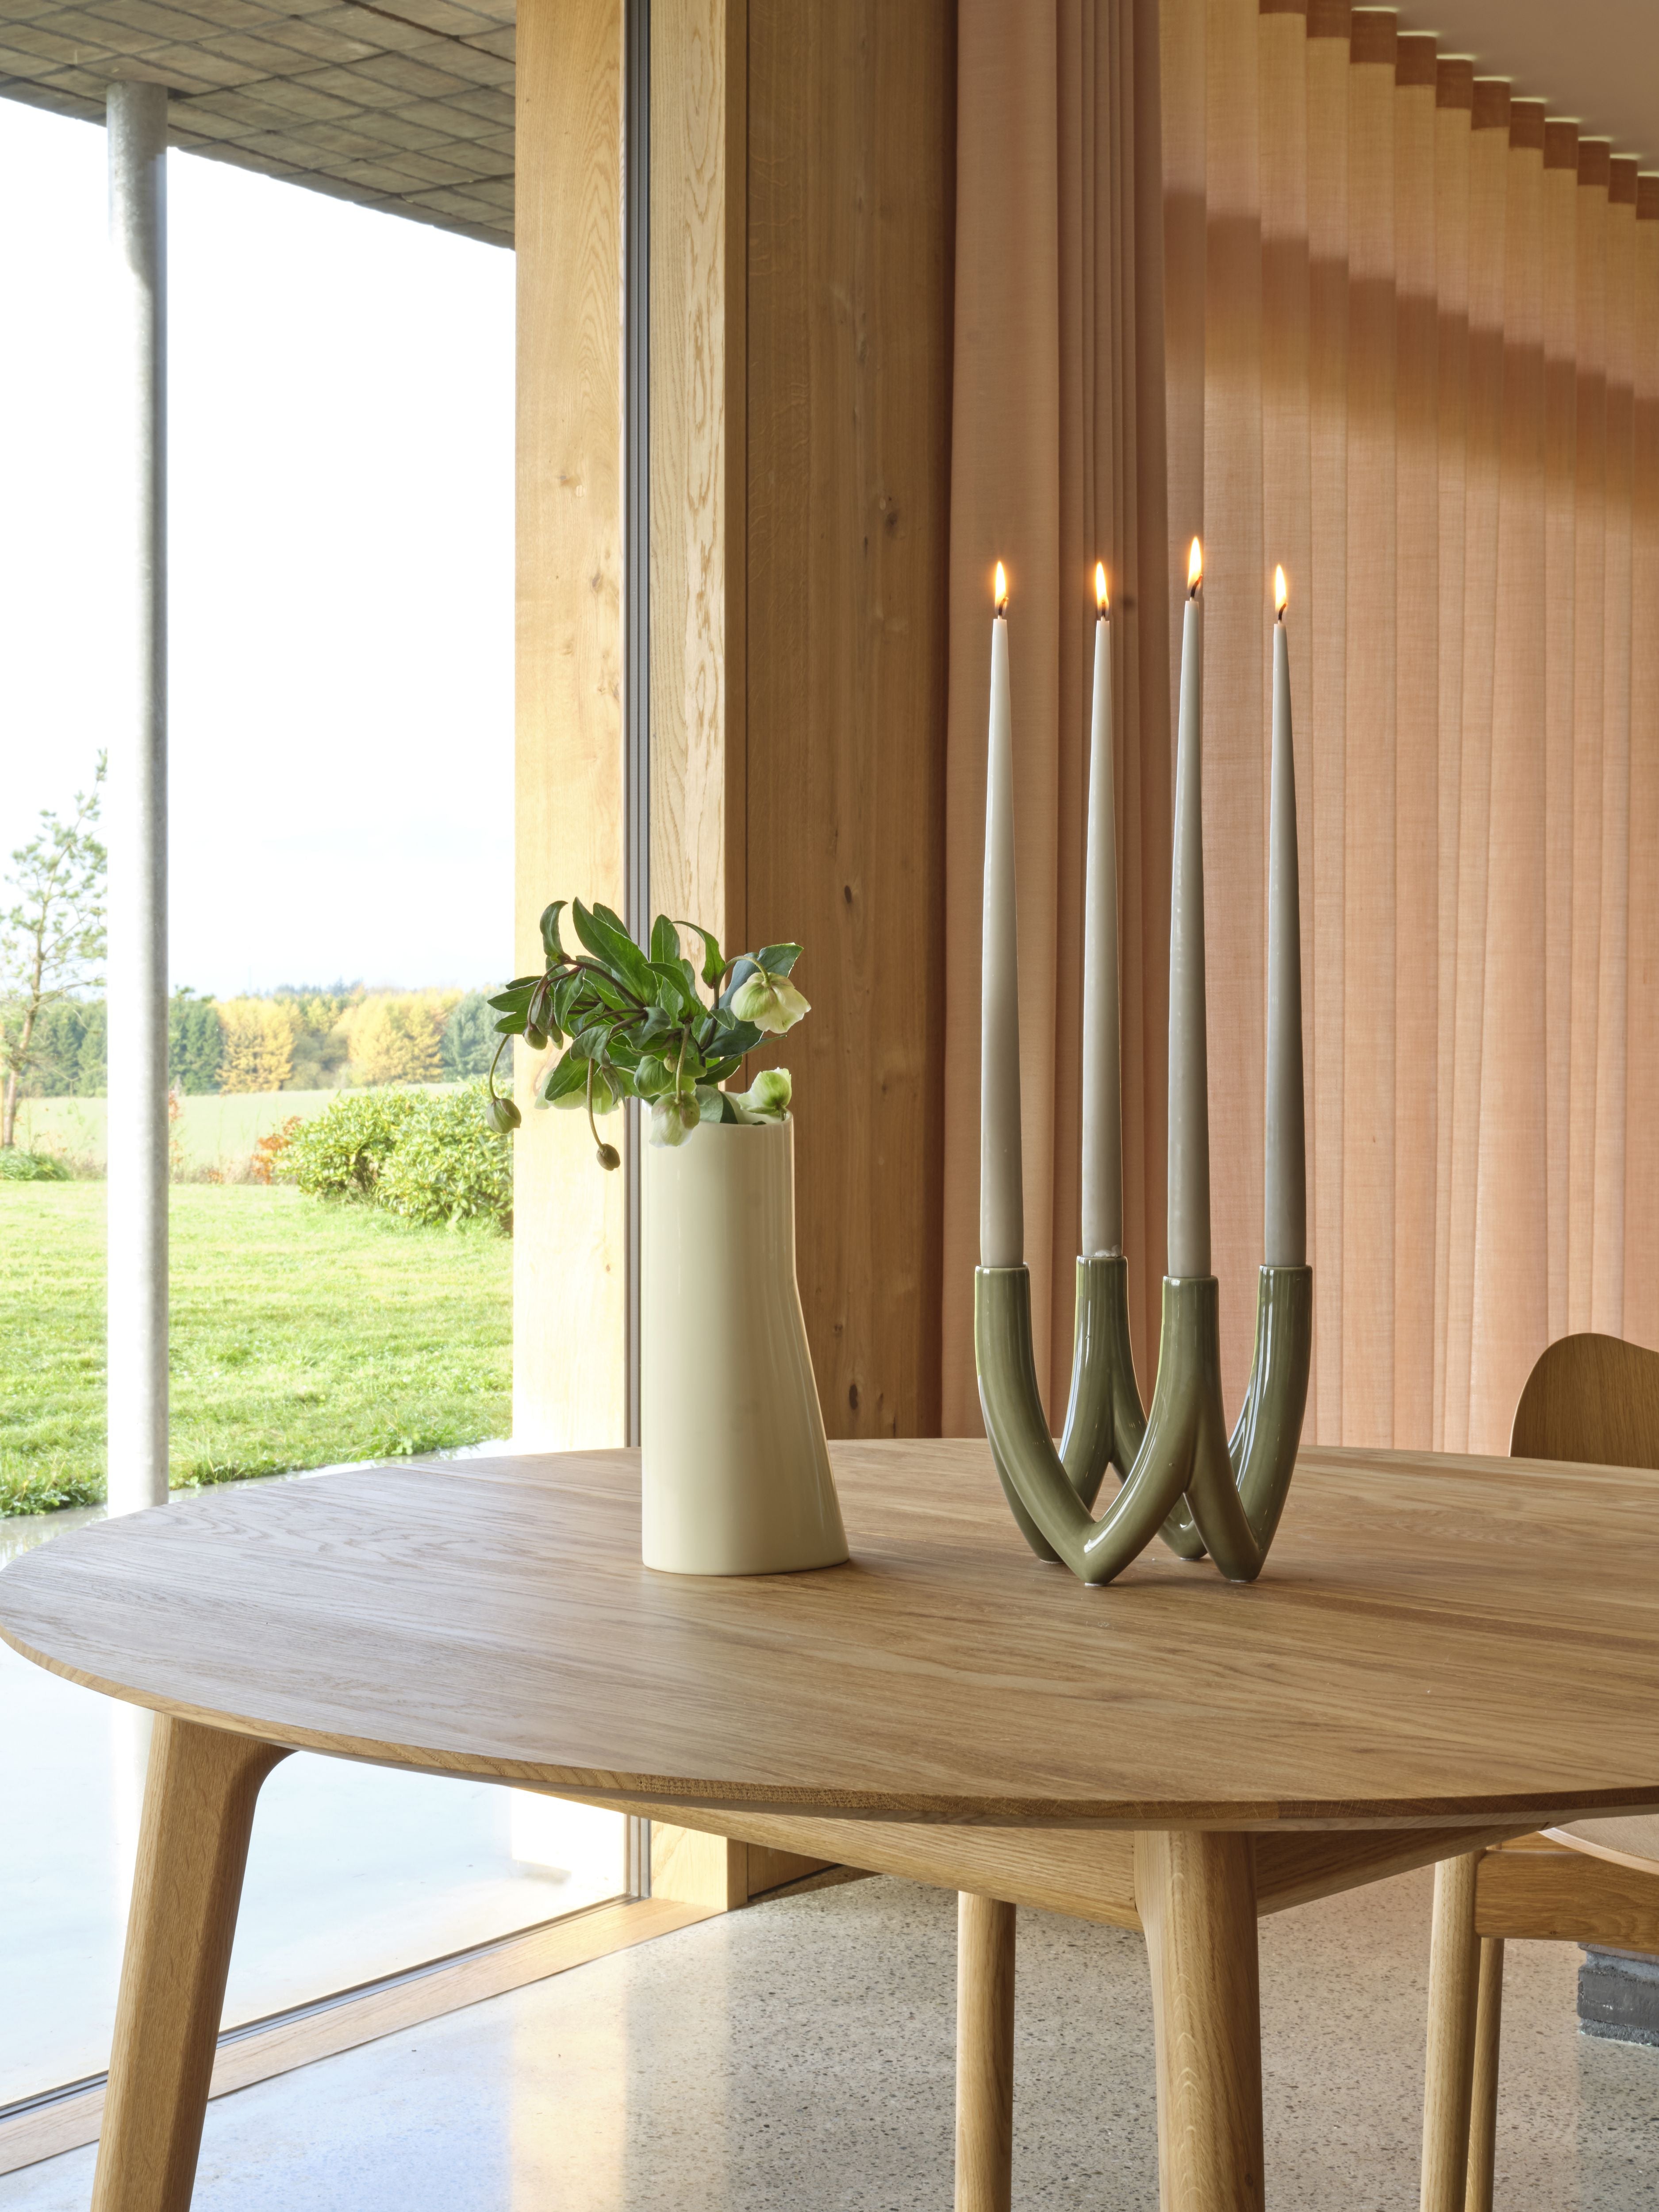 Ro Collection Table extensible salon en chêne huilé, Ø 120 cm